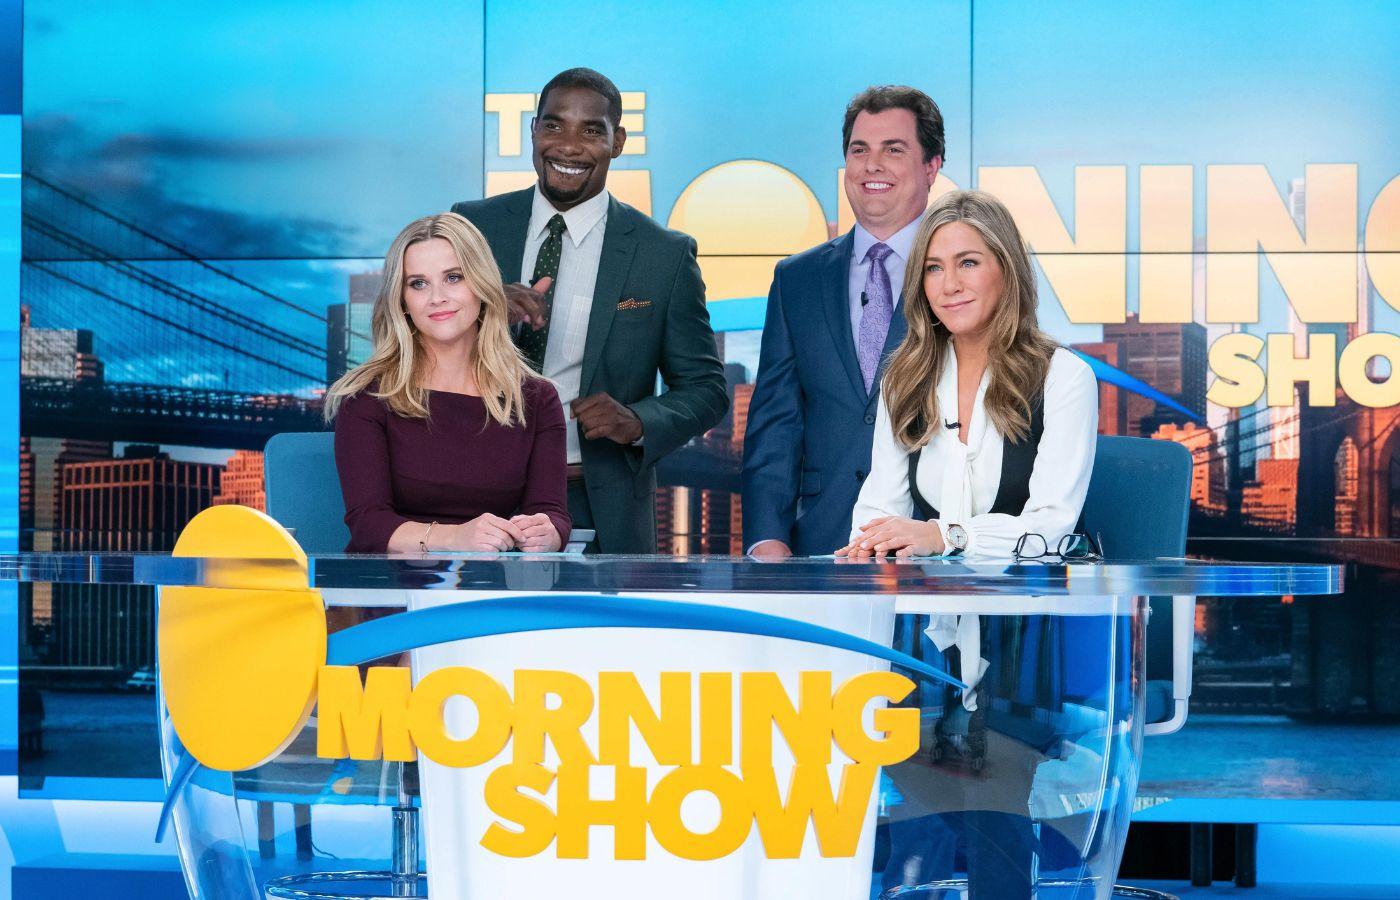 The Morning Show cast ahead of Season 3